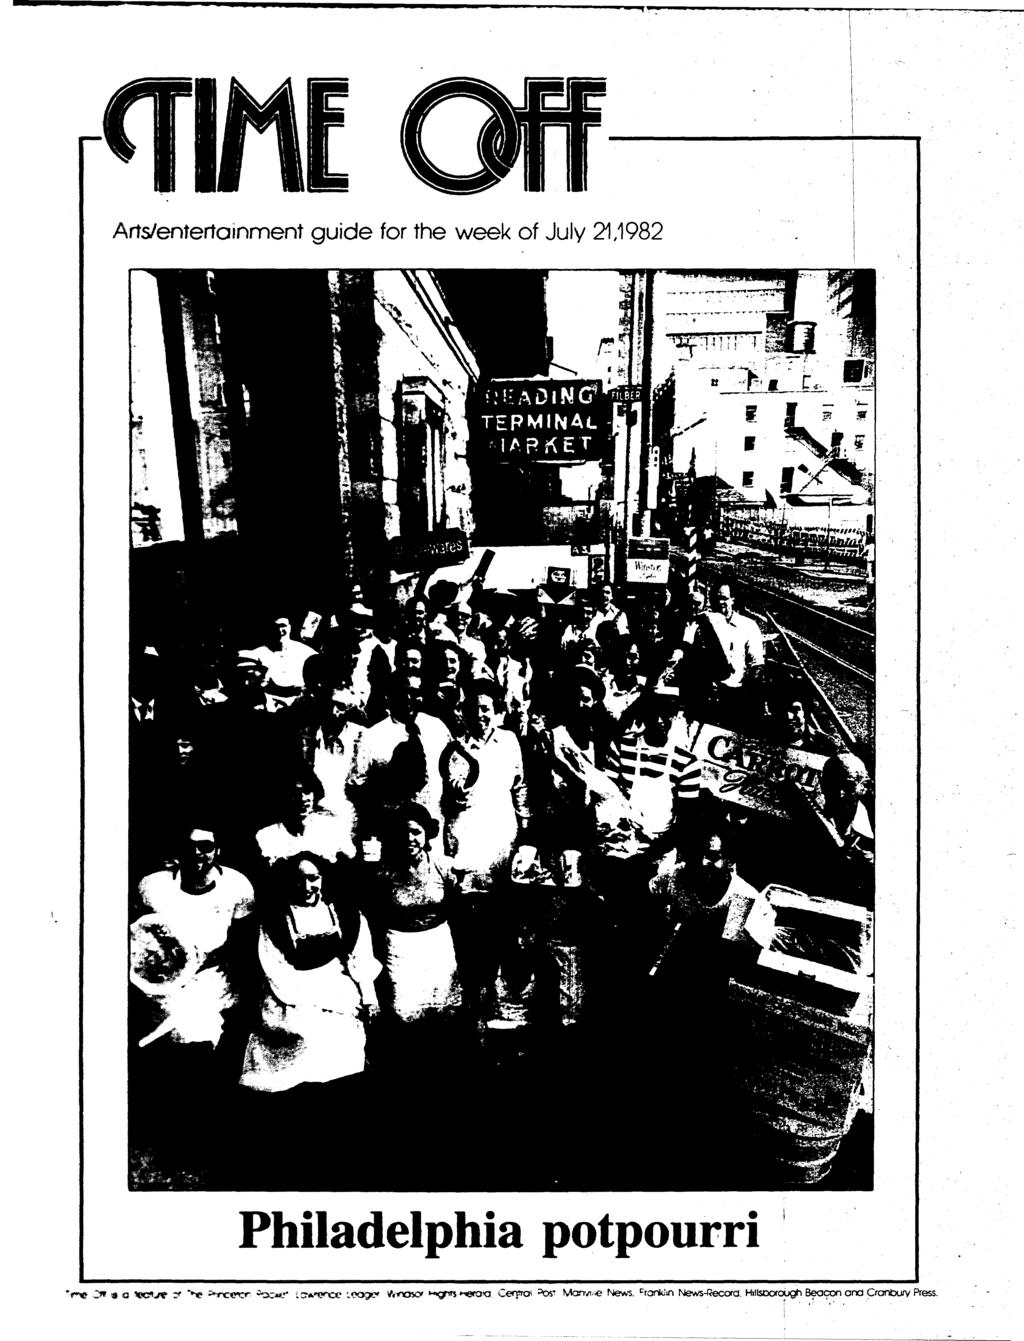 Arts/entertainment guide for the week of July 21,1982 Philadelphia potpourri -D* * a teesje tr **w *«X««ic?